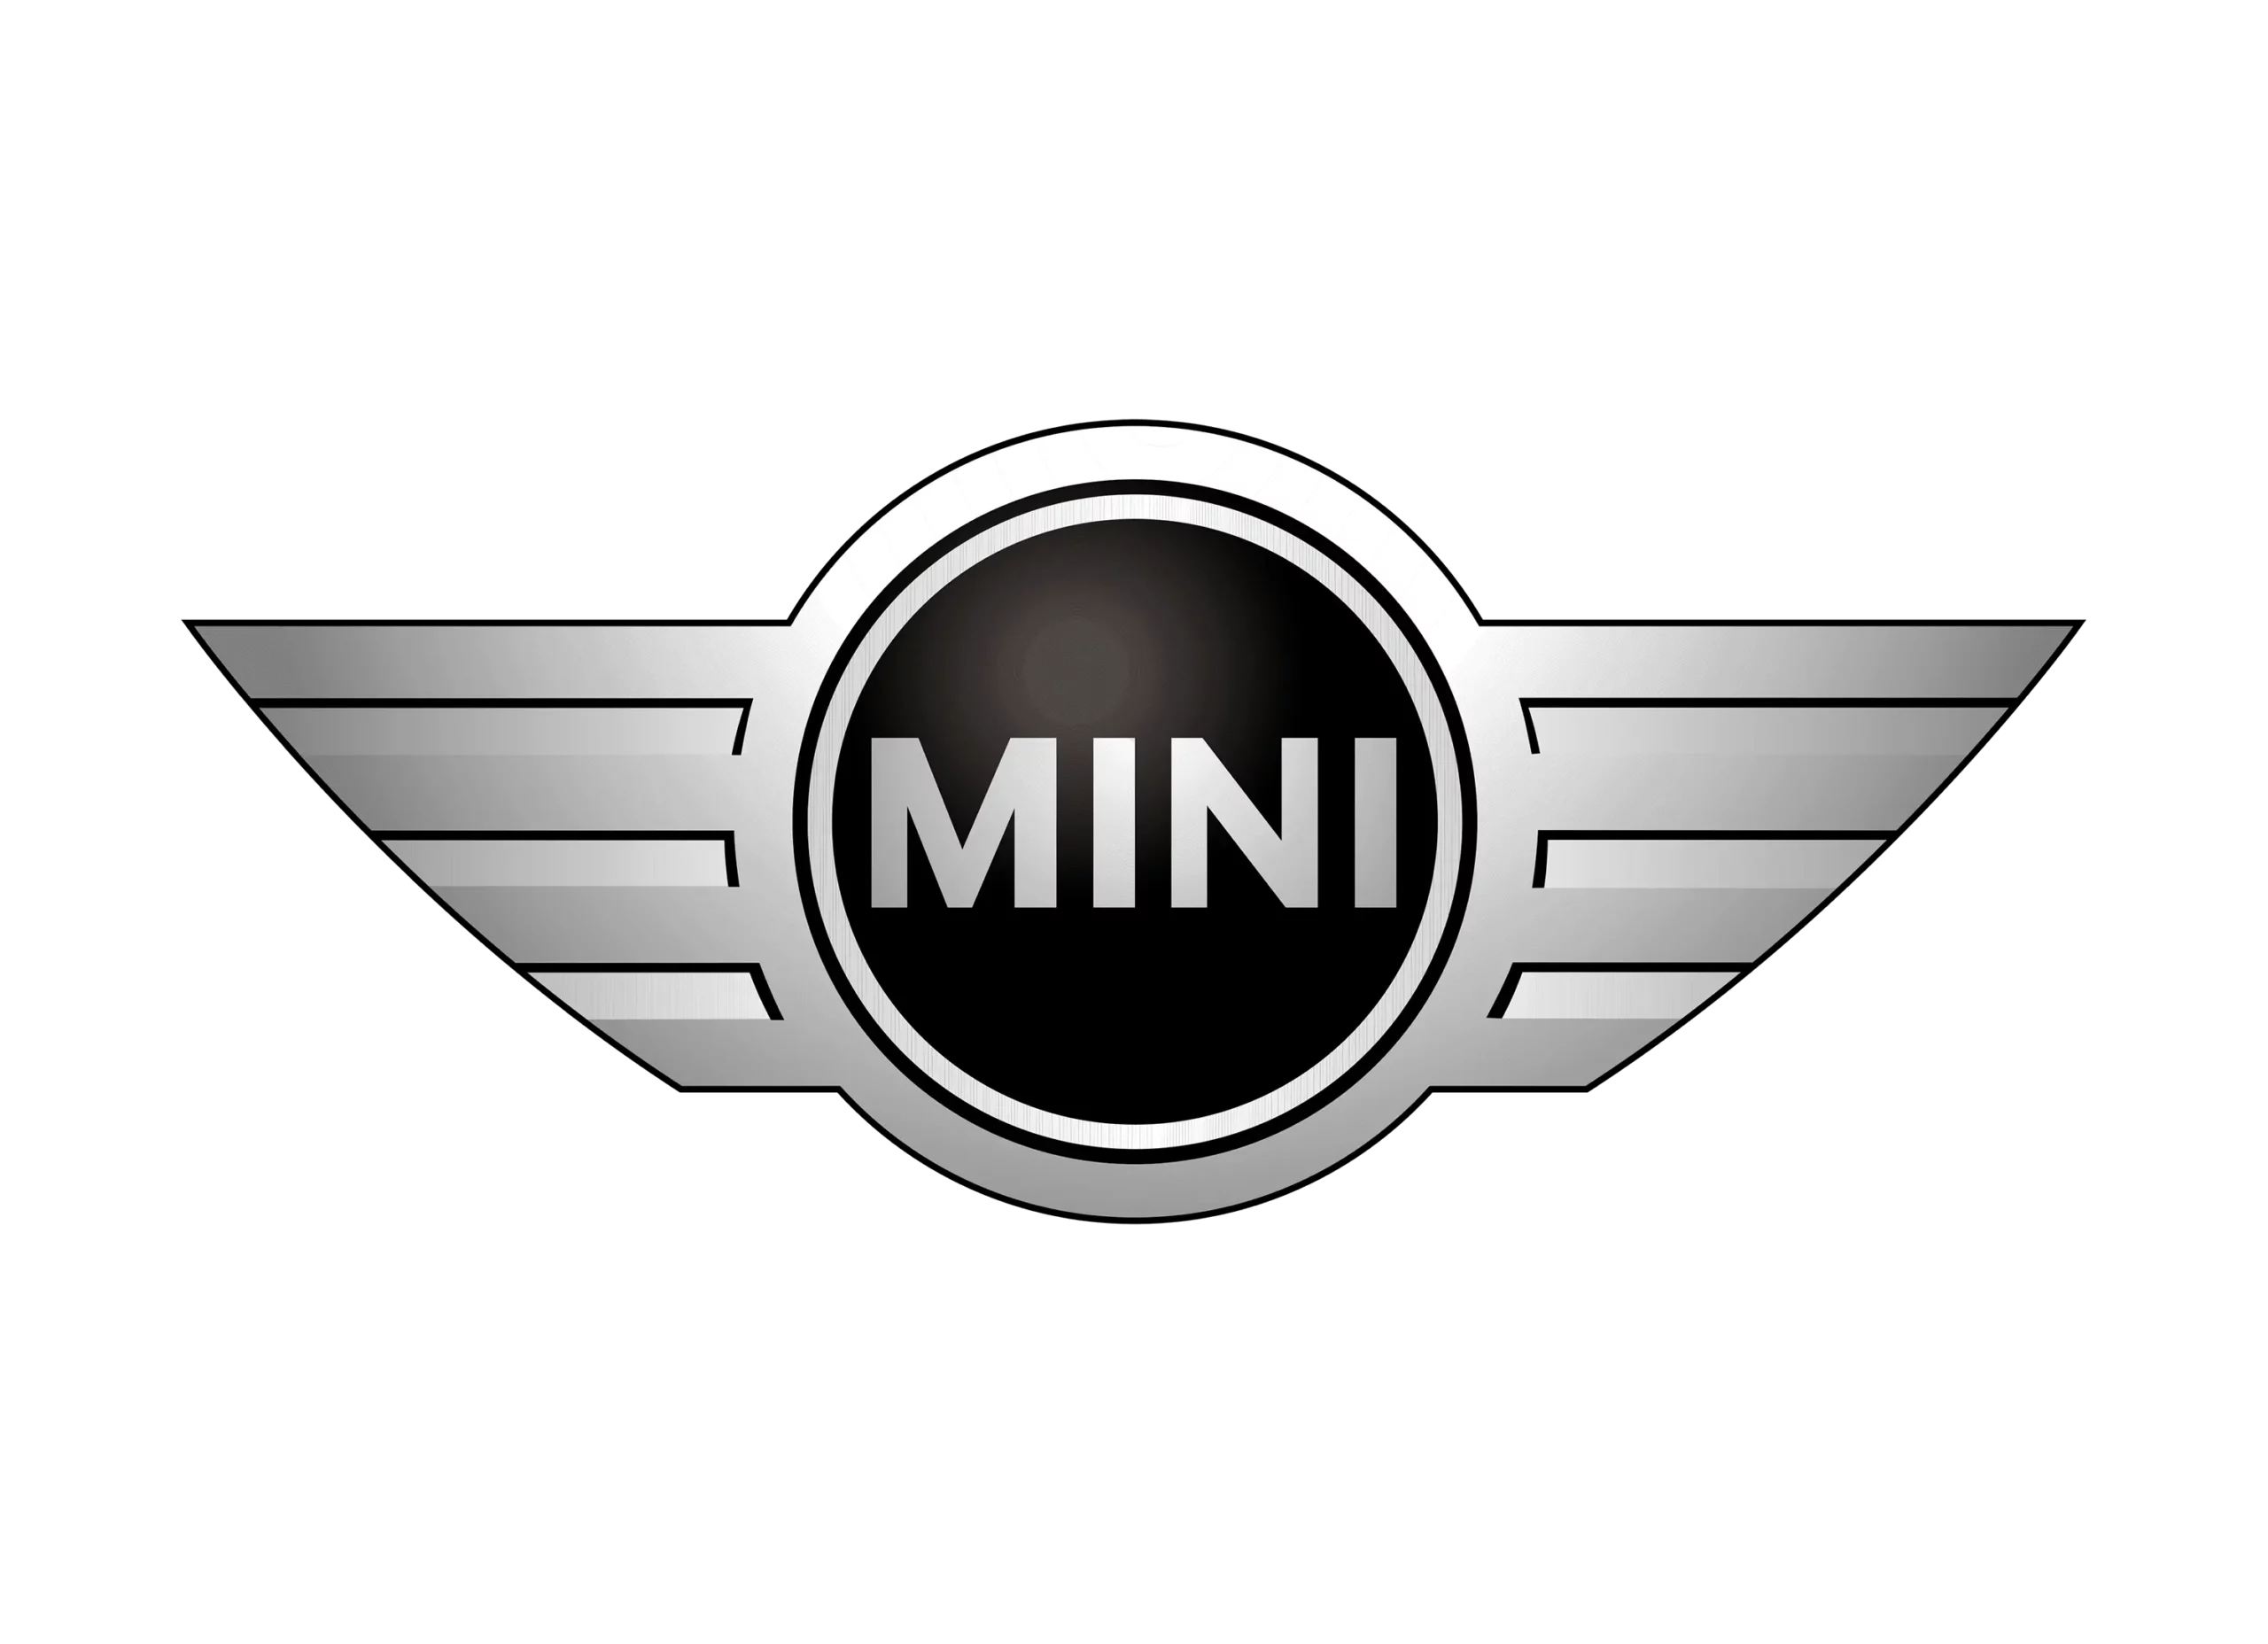 Mini logo 2001-2018